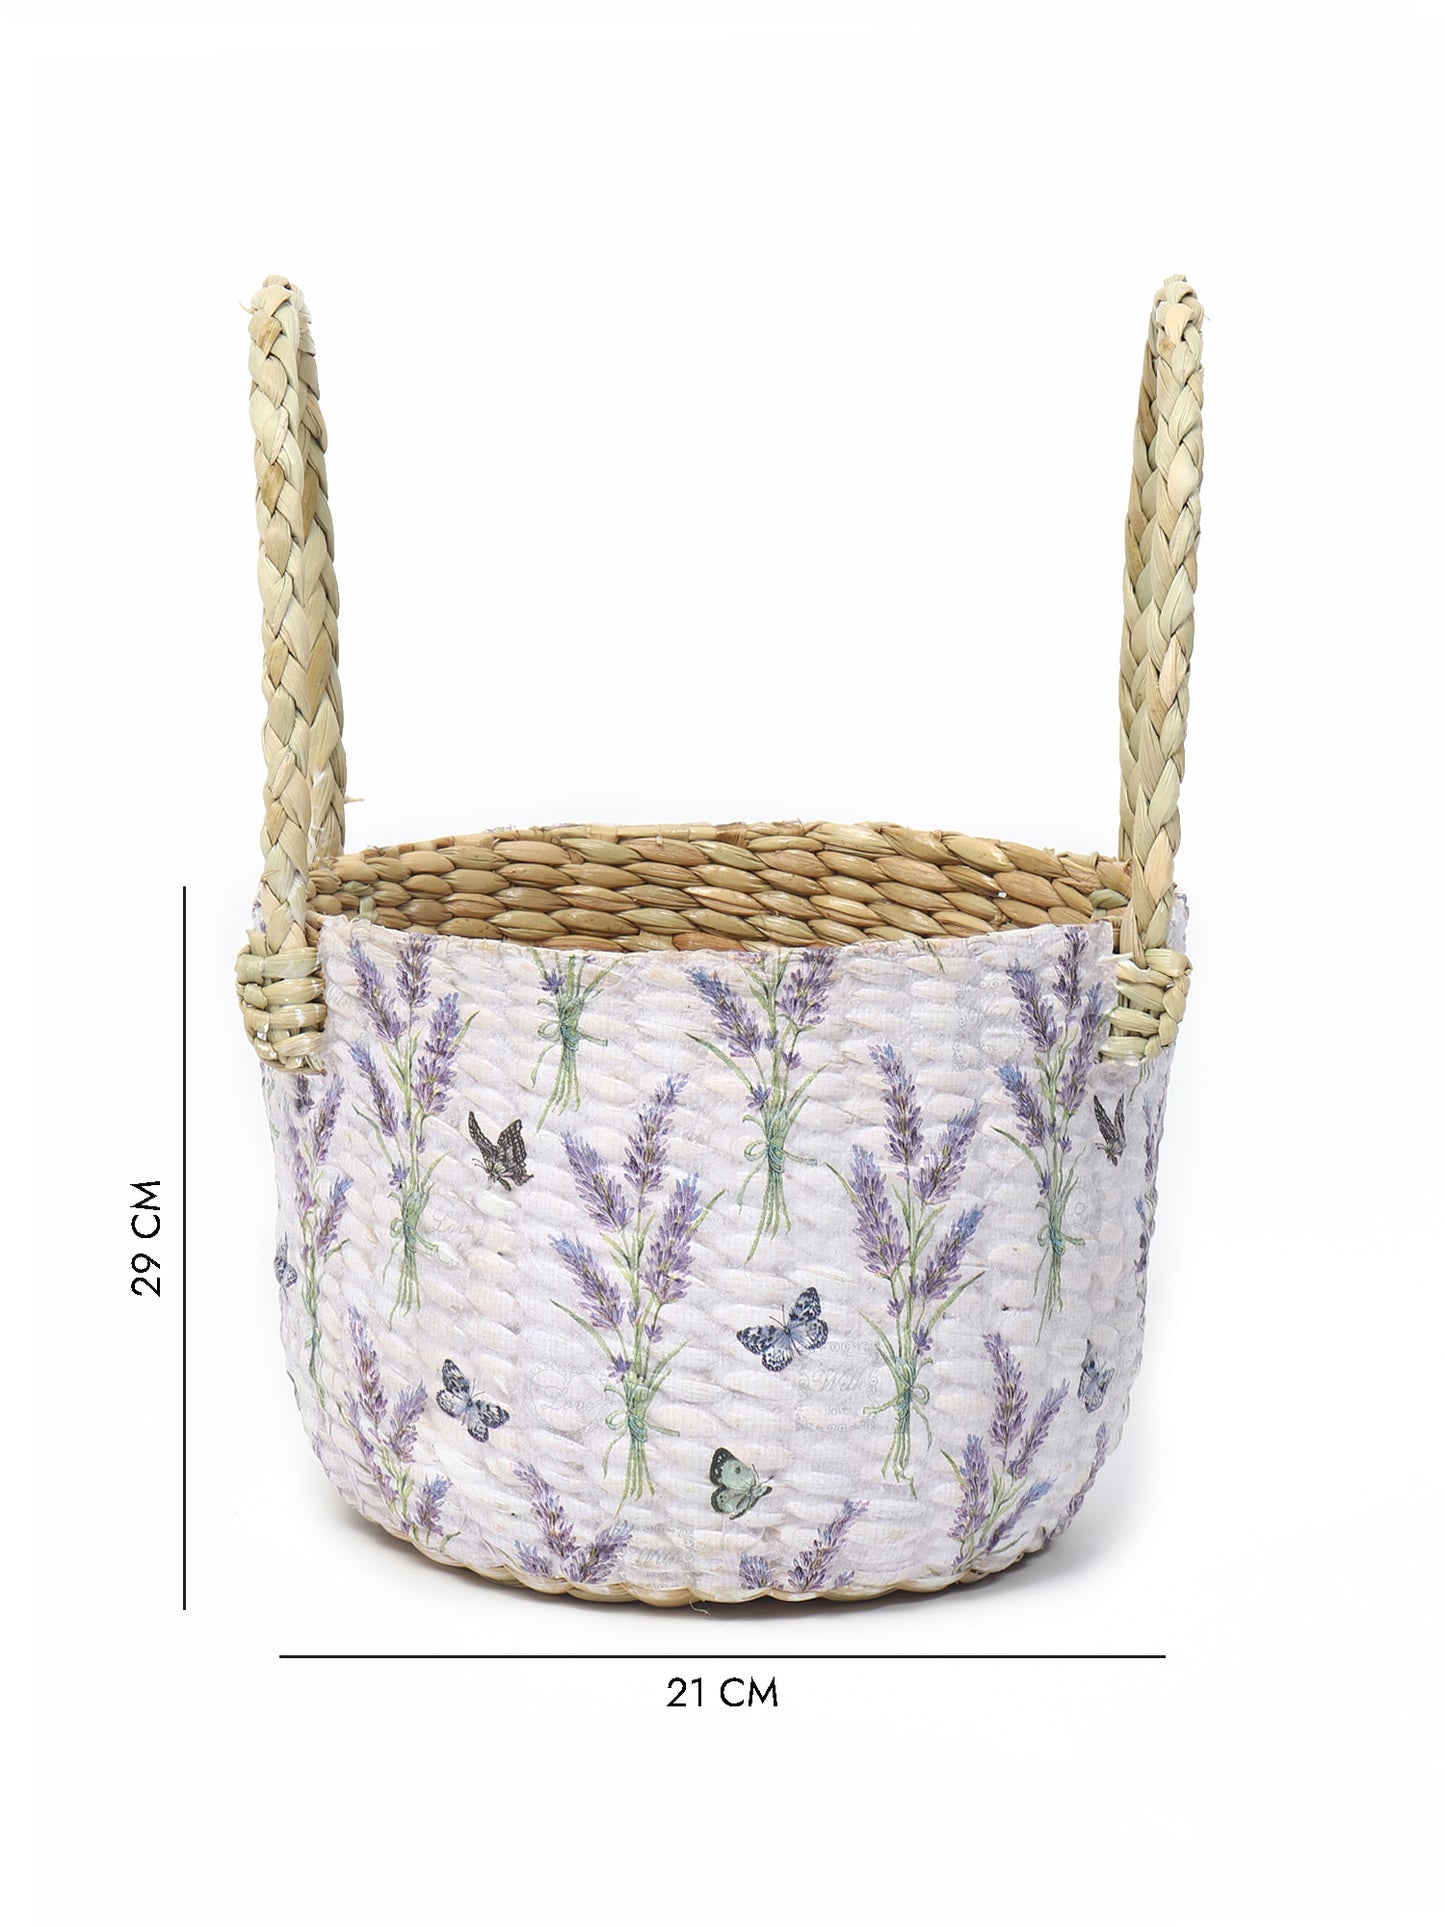 Buy Seagrass Fruit Basket